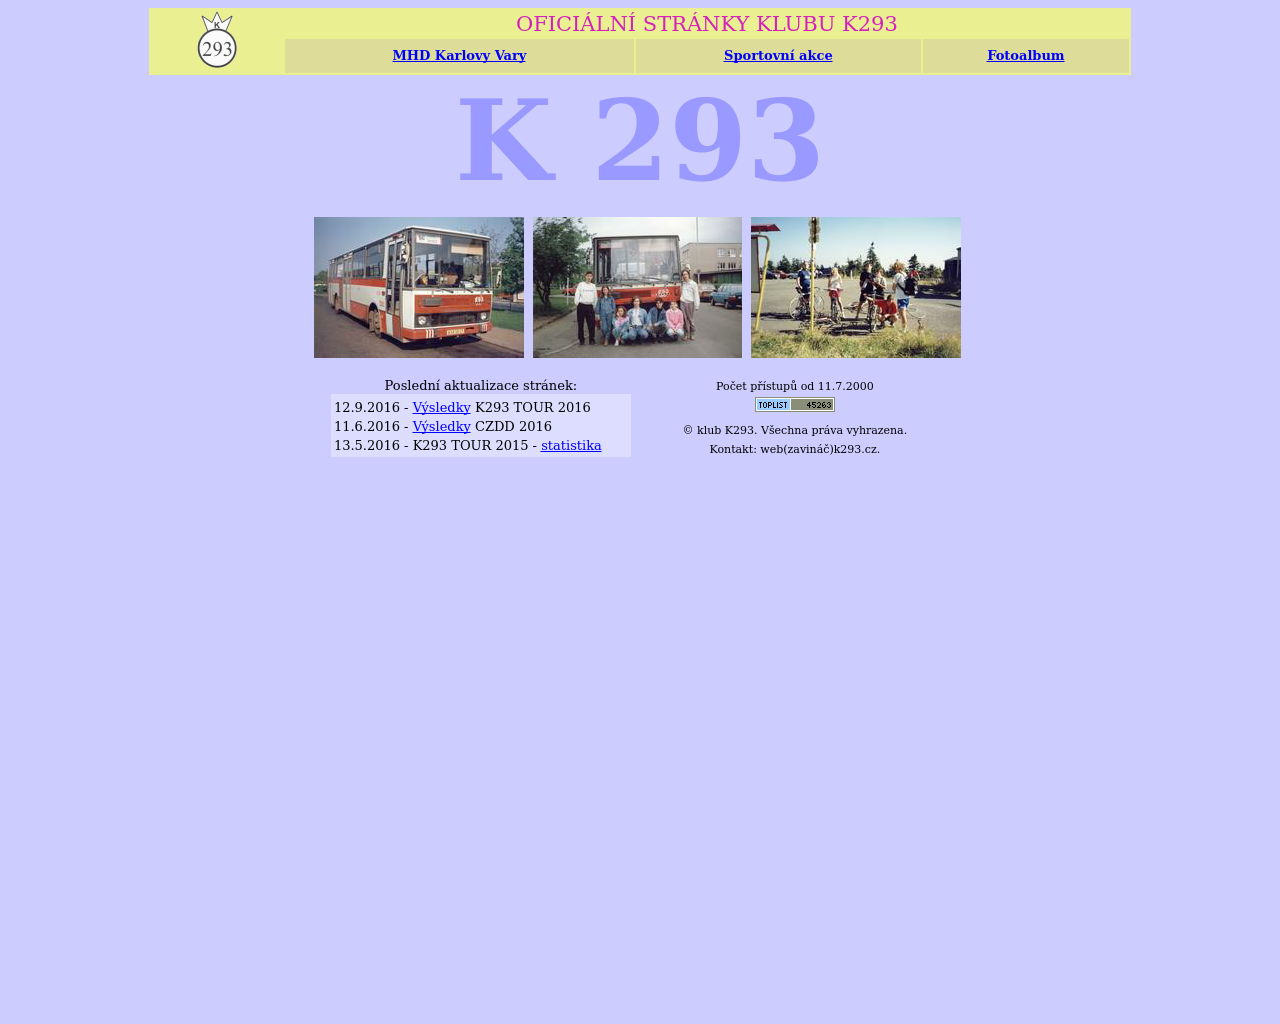 Site Image k293.cz v 1280x1024